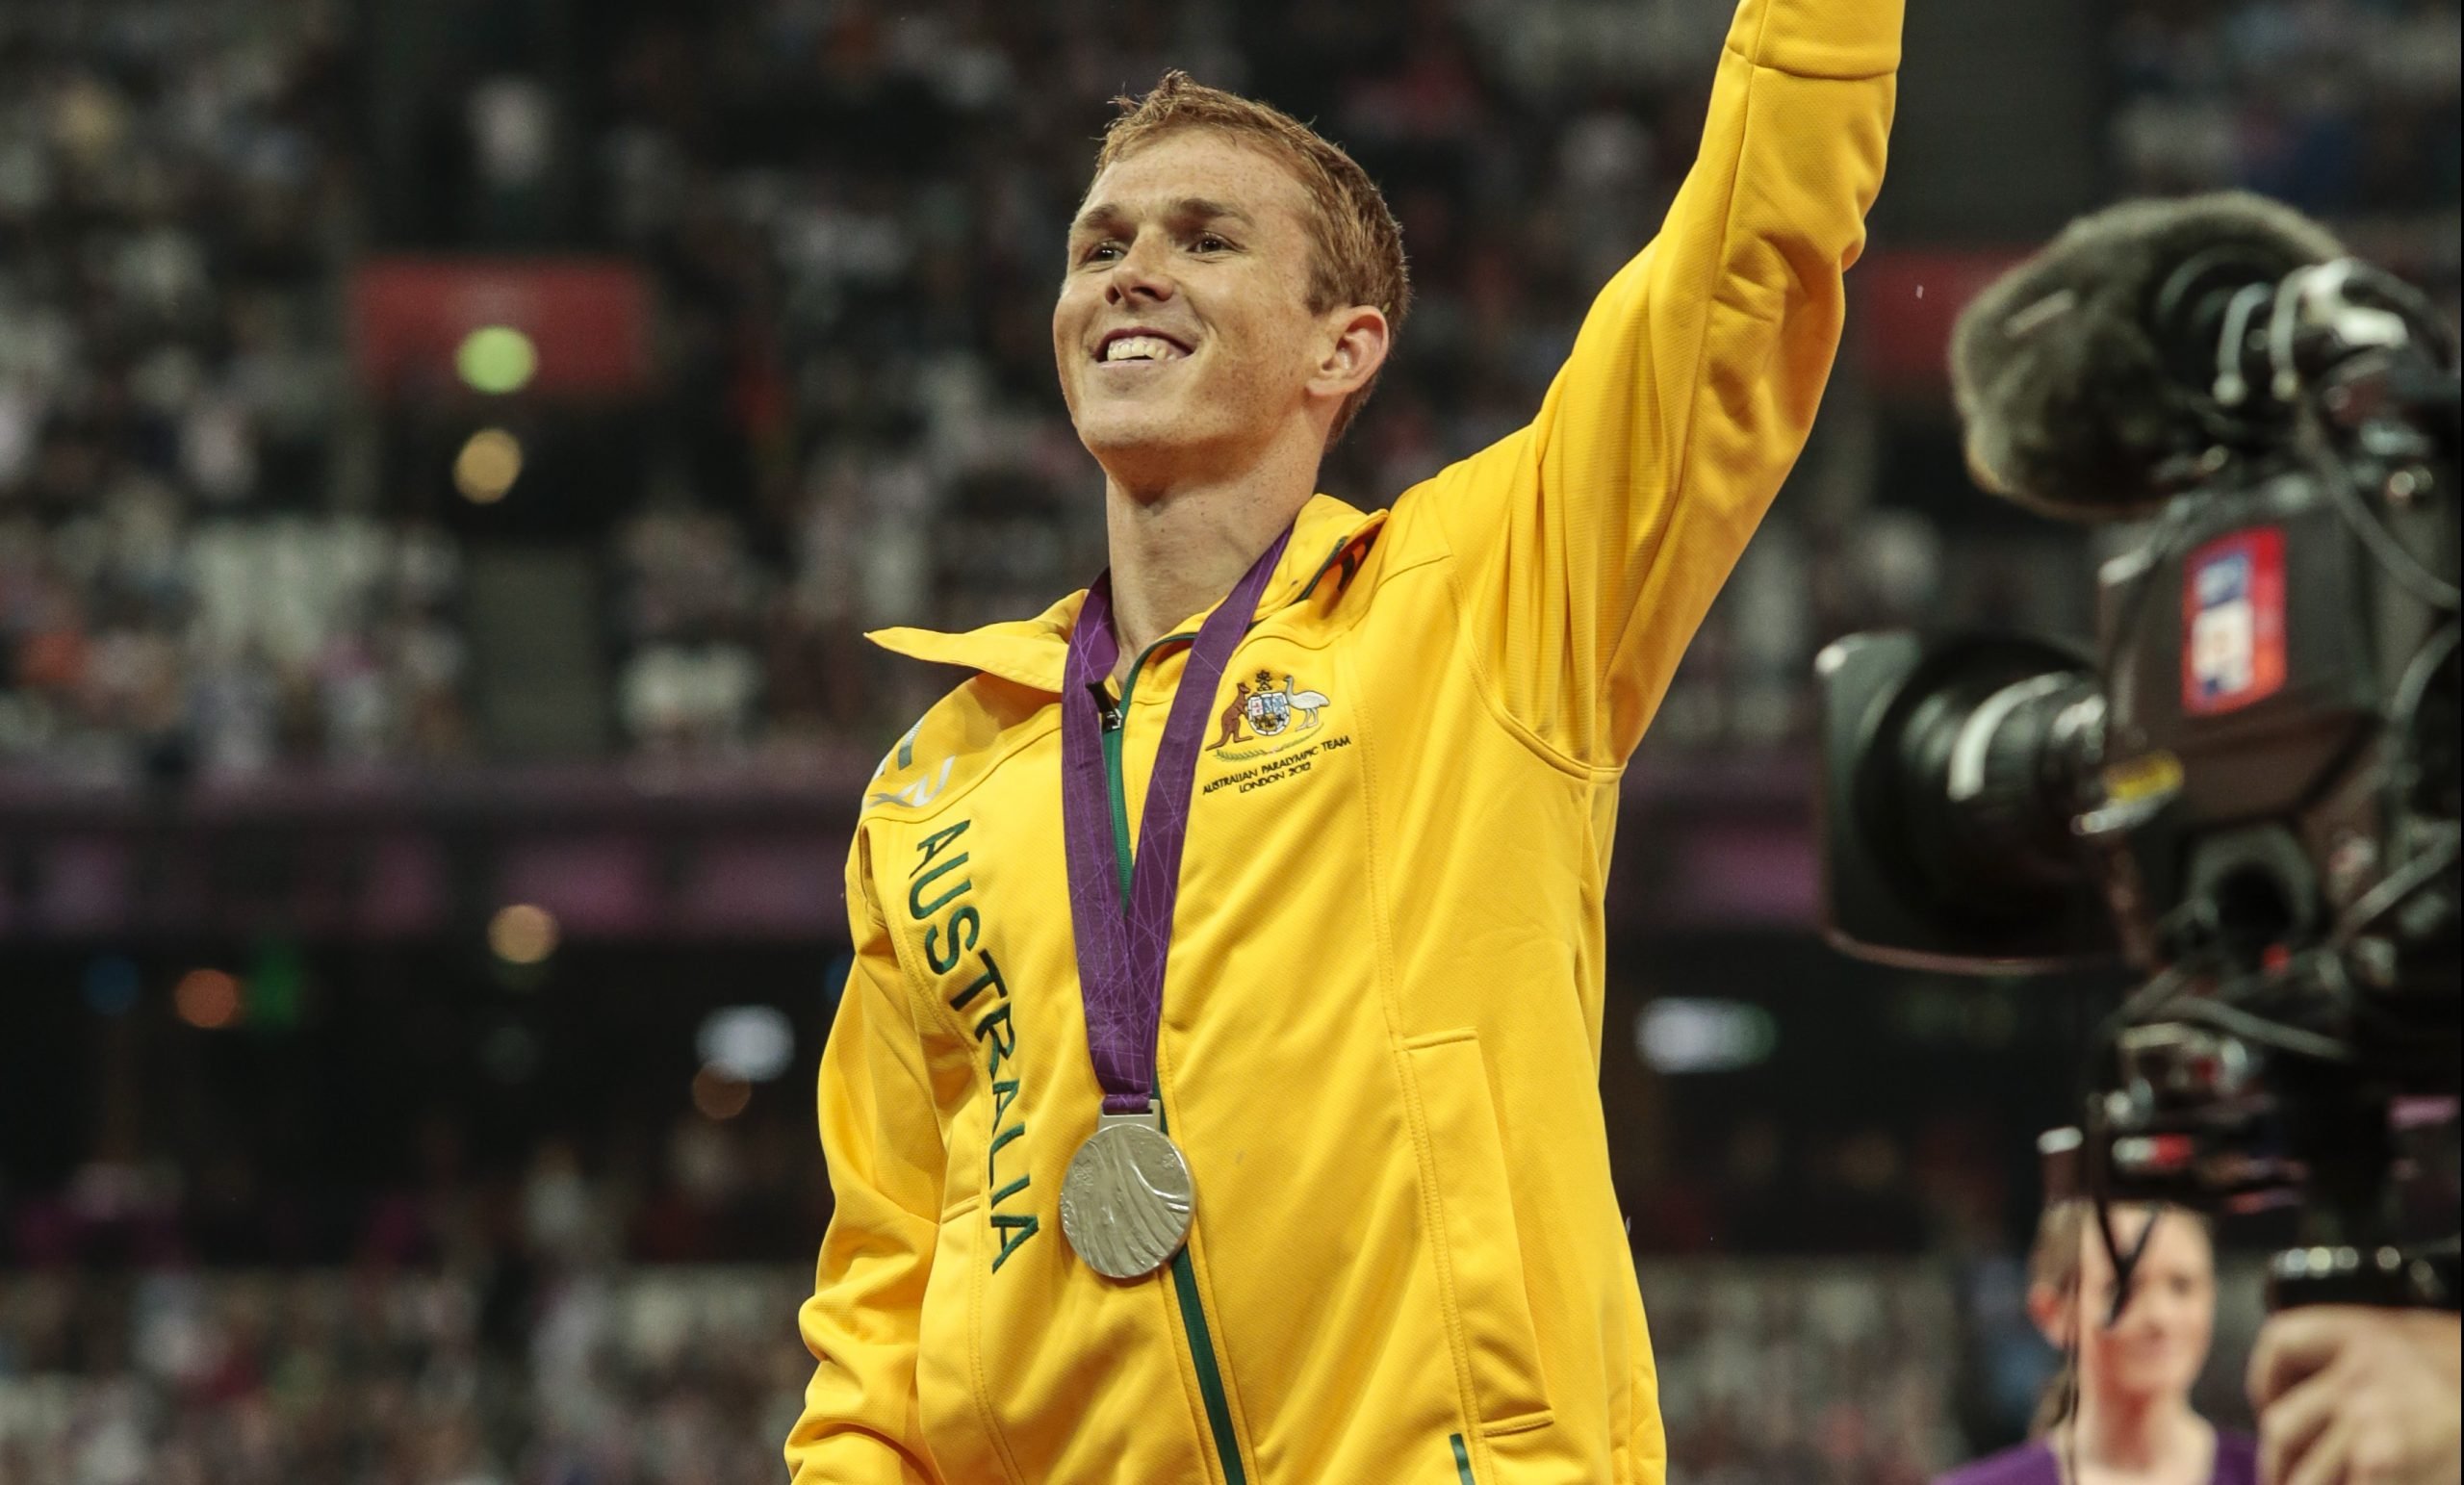 Multiple Paralympic medallist Brad Scott announces his retirement